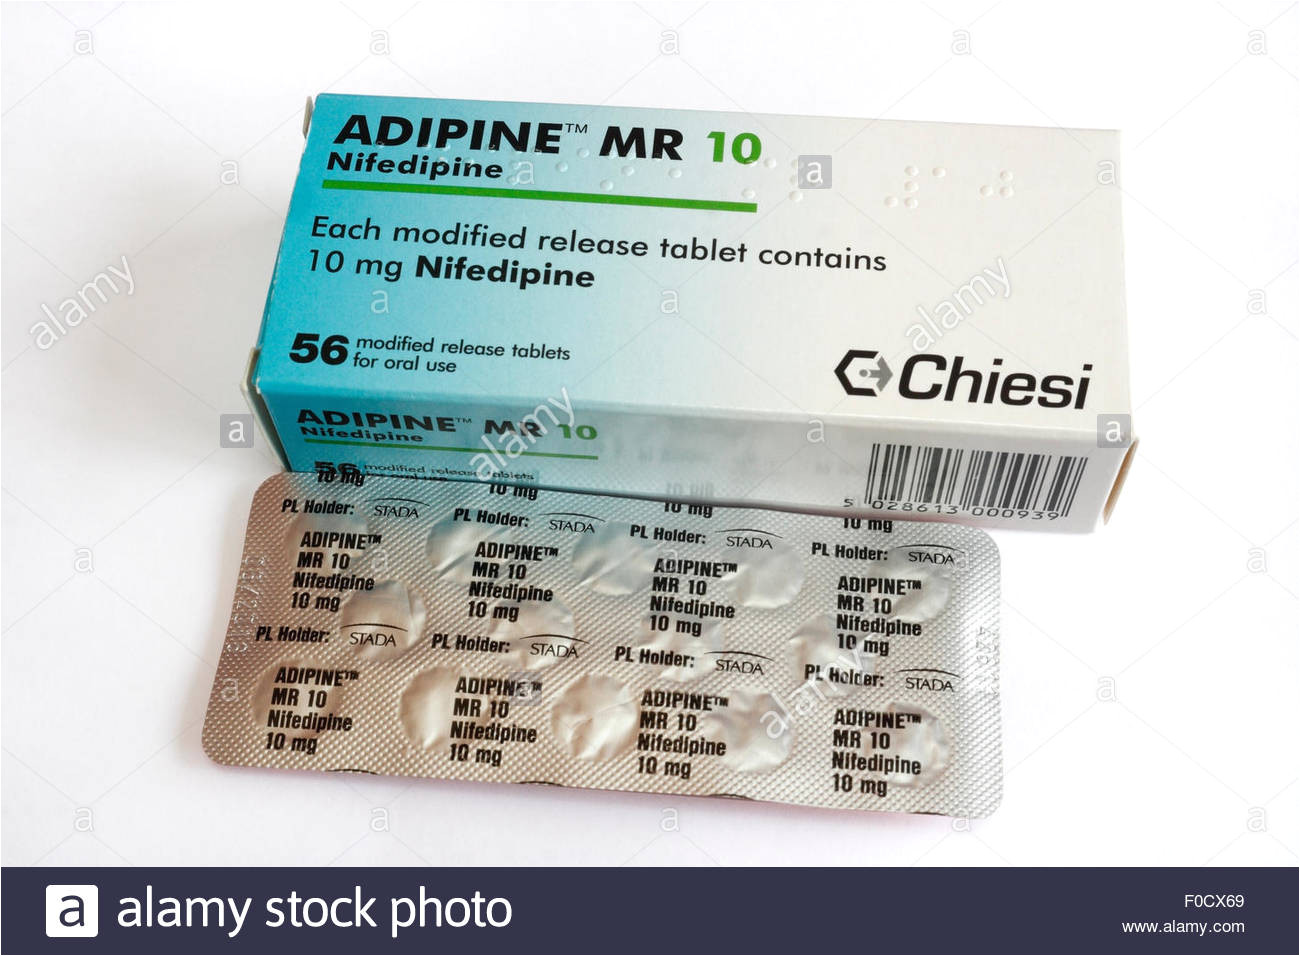 adipine herr tabletten calcium antagonisten nifedipin f0cx69 jpg